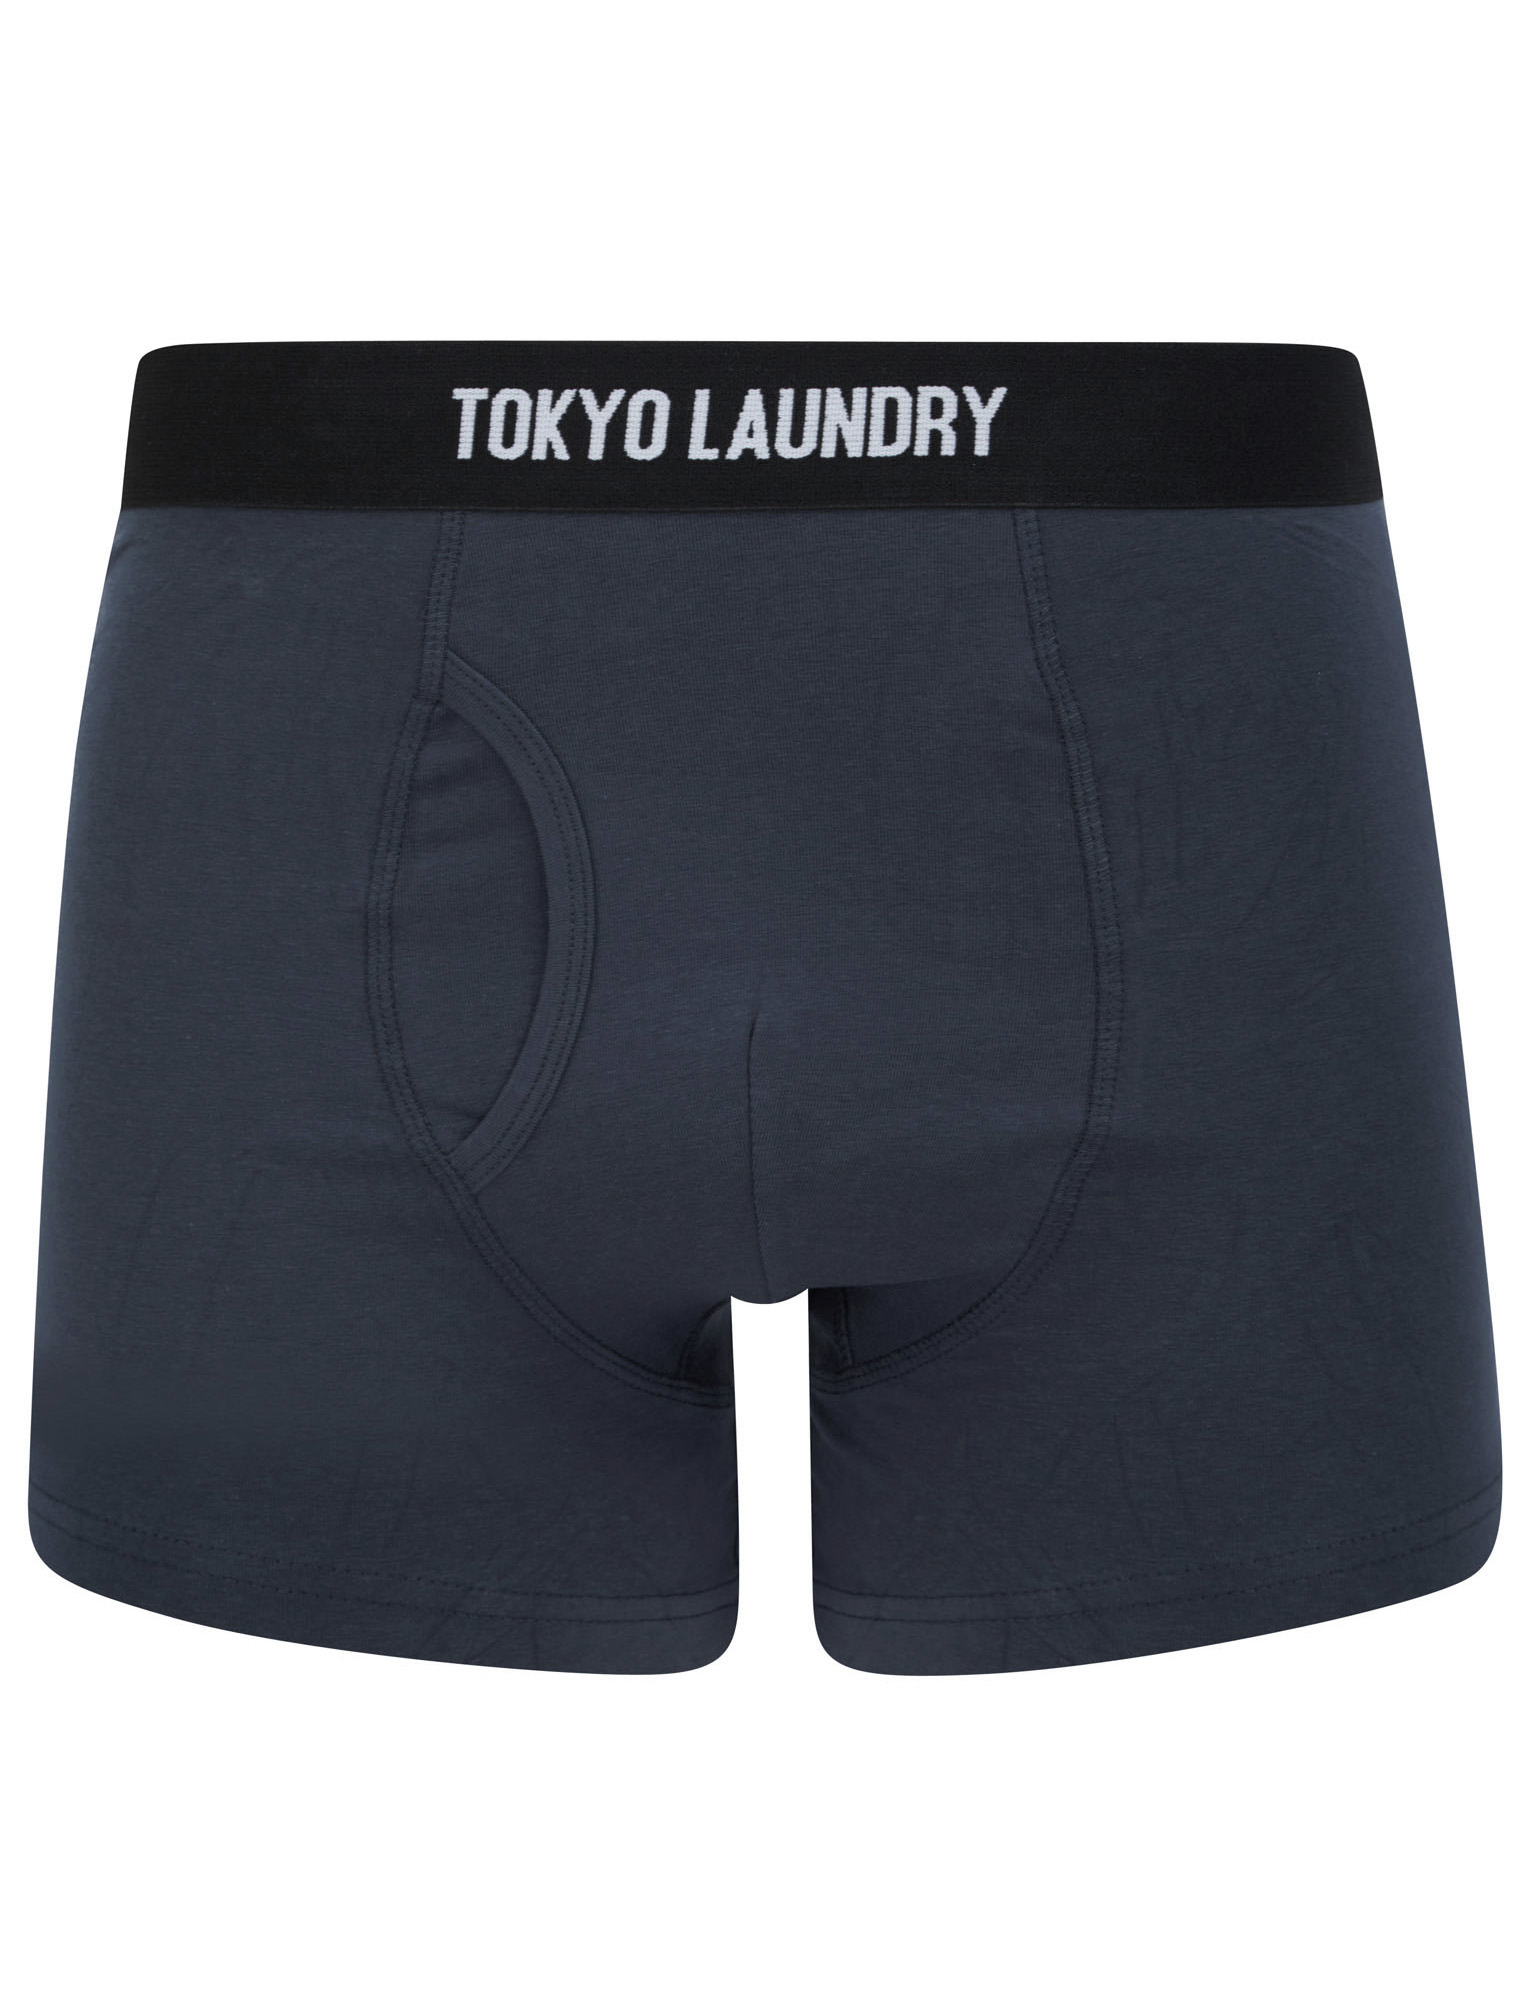 NEW BALANCE Underwear: Men's 5-Pack Velocity Cotton Boxers Trunks, Black,  size S